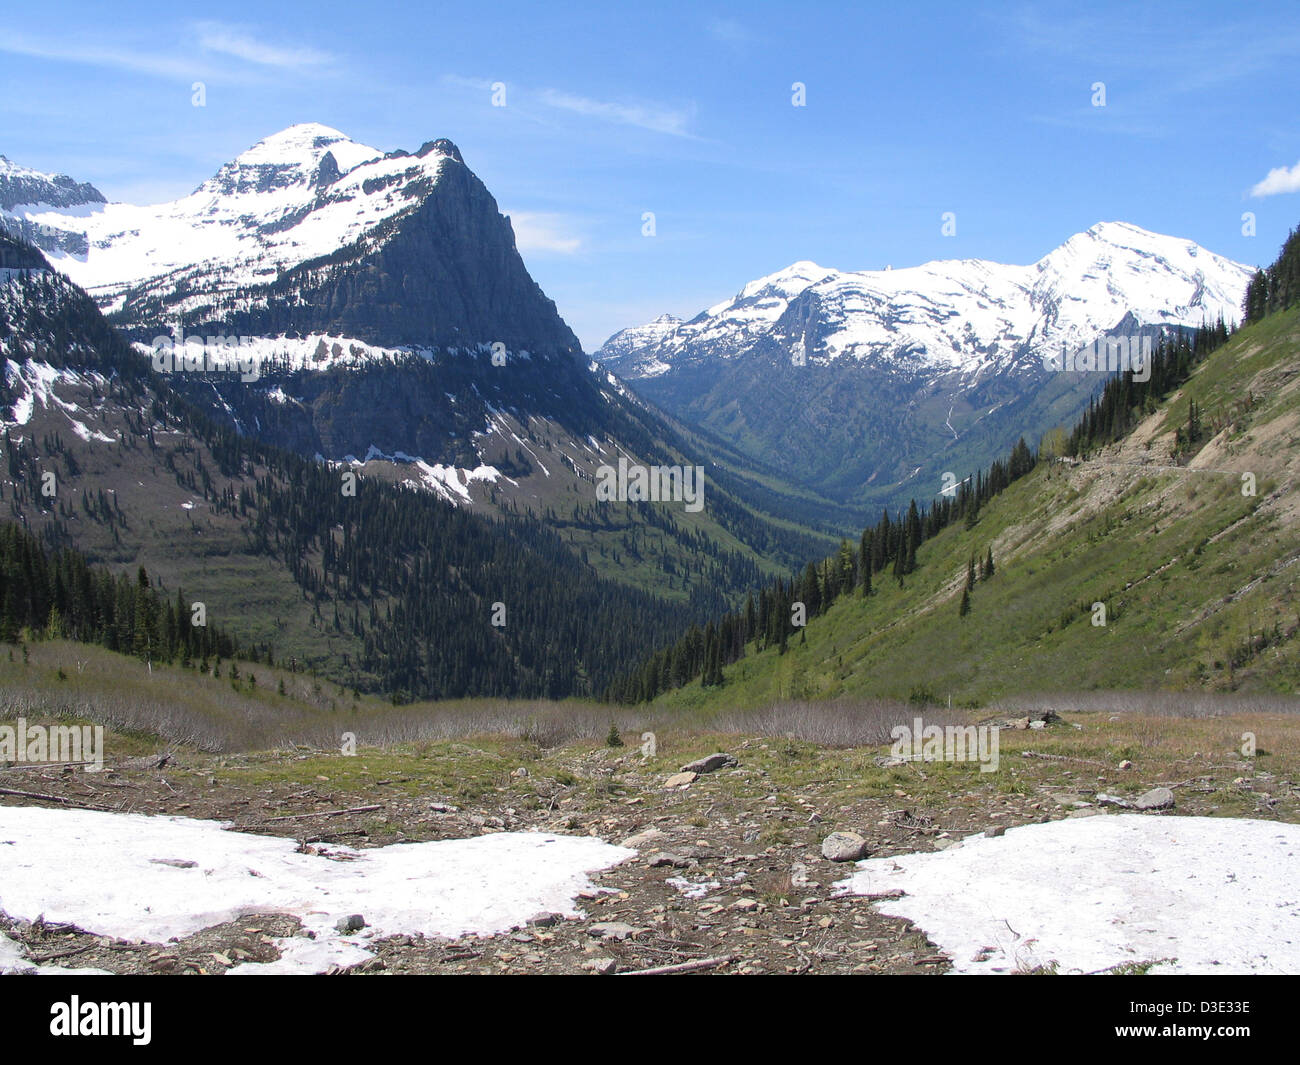 Mt. Clements and Heavens Peak Stock Photo